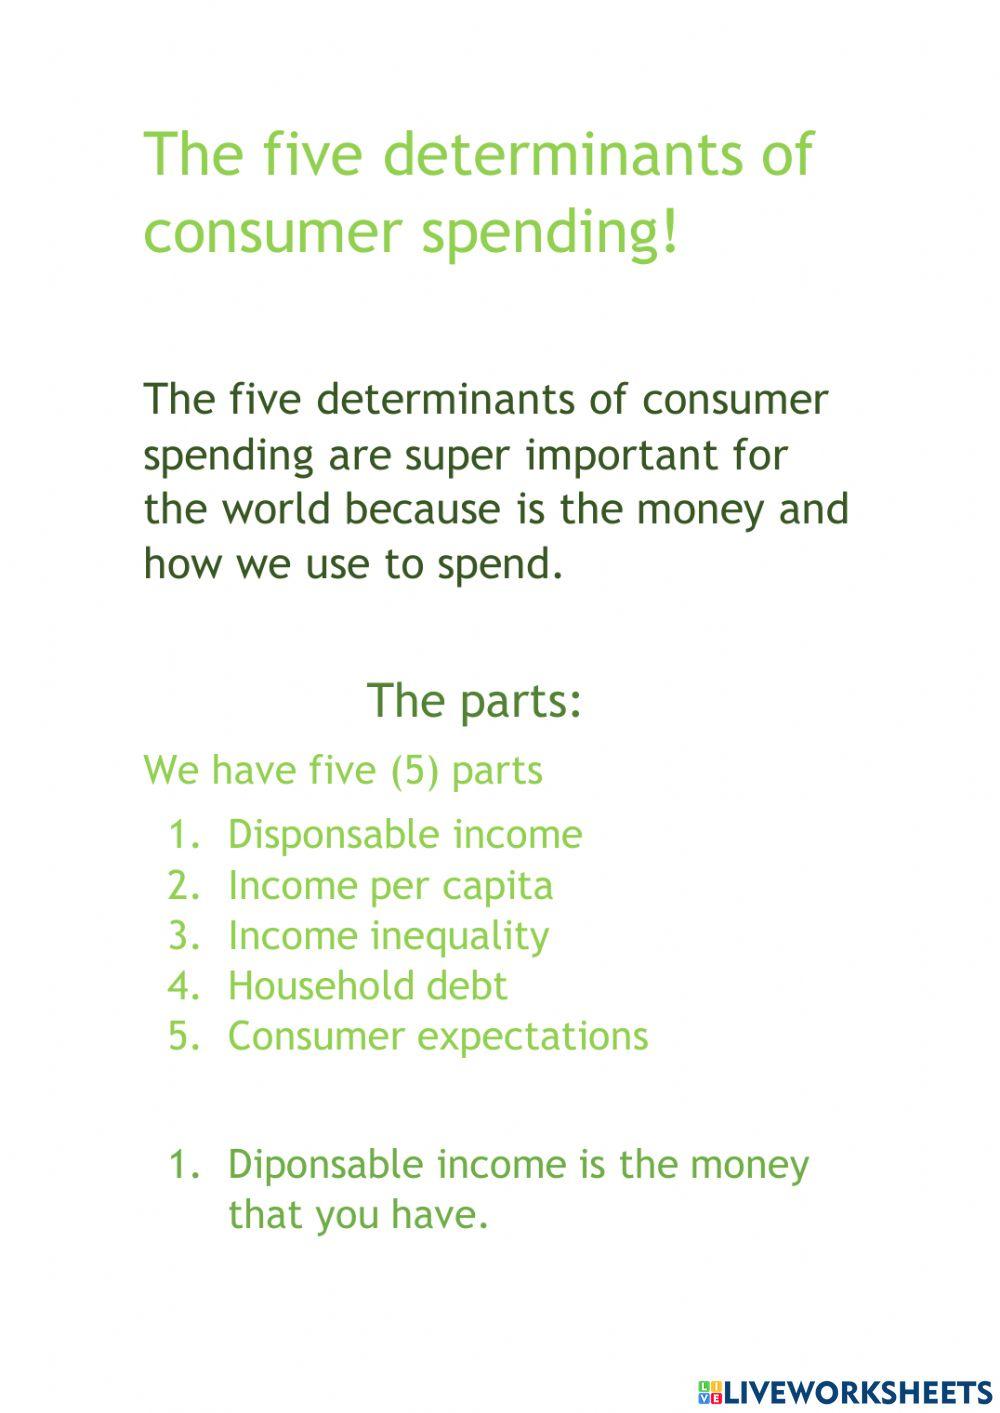 The five determinants of consumer spending